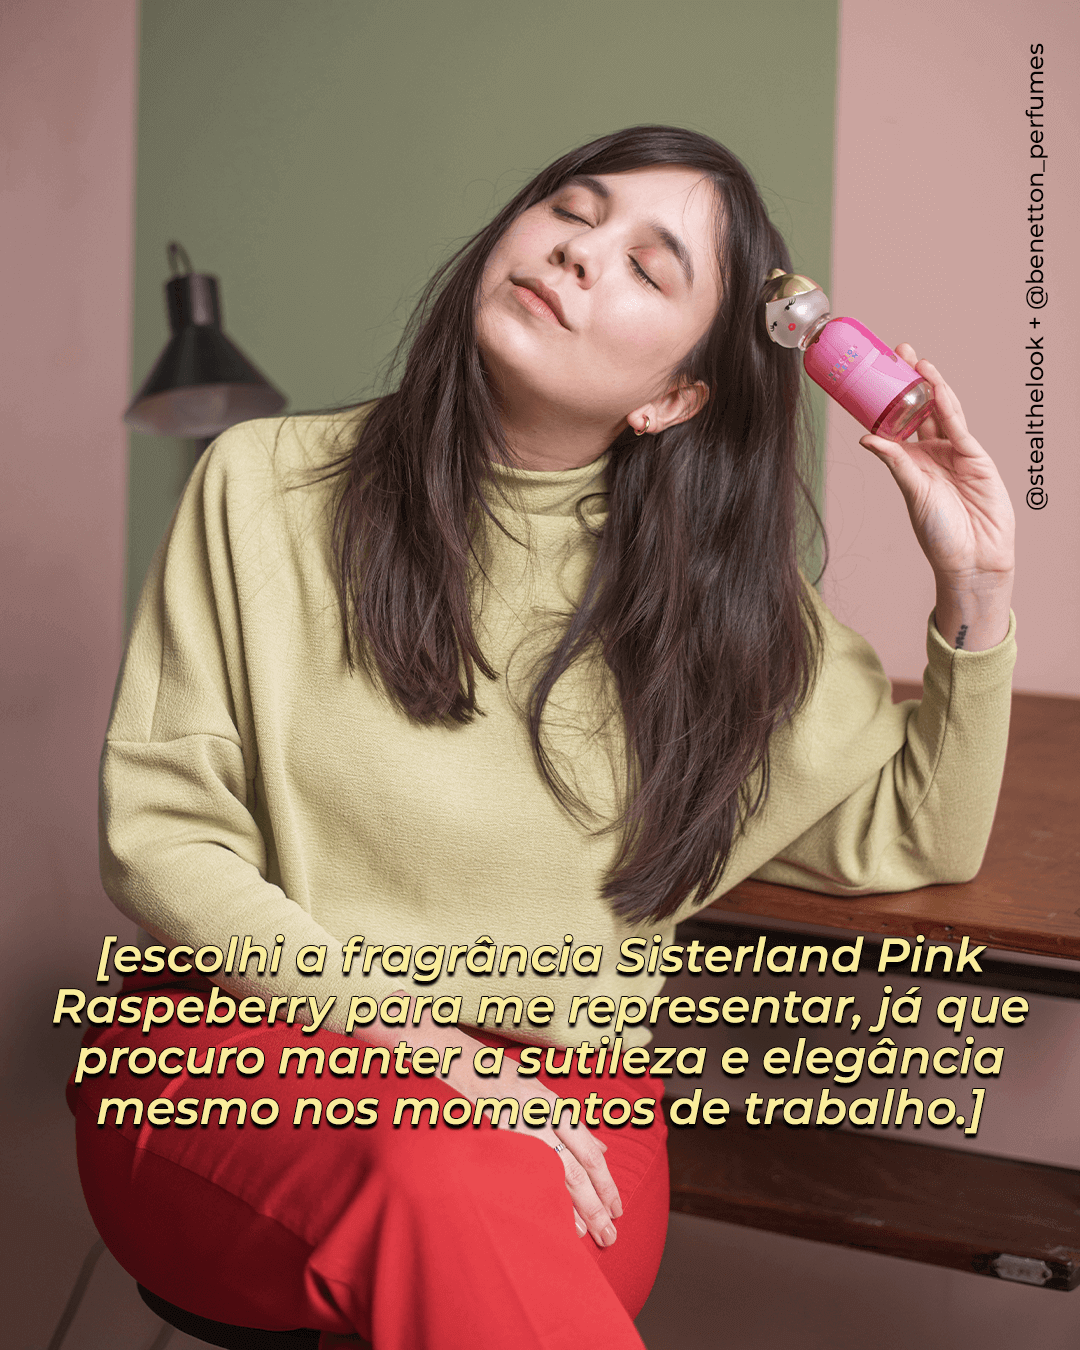 Isadora Diógenes - perfume - amizade no trabalho - inverno - brasil - https://stealthelook.com.br